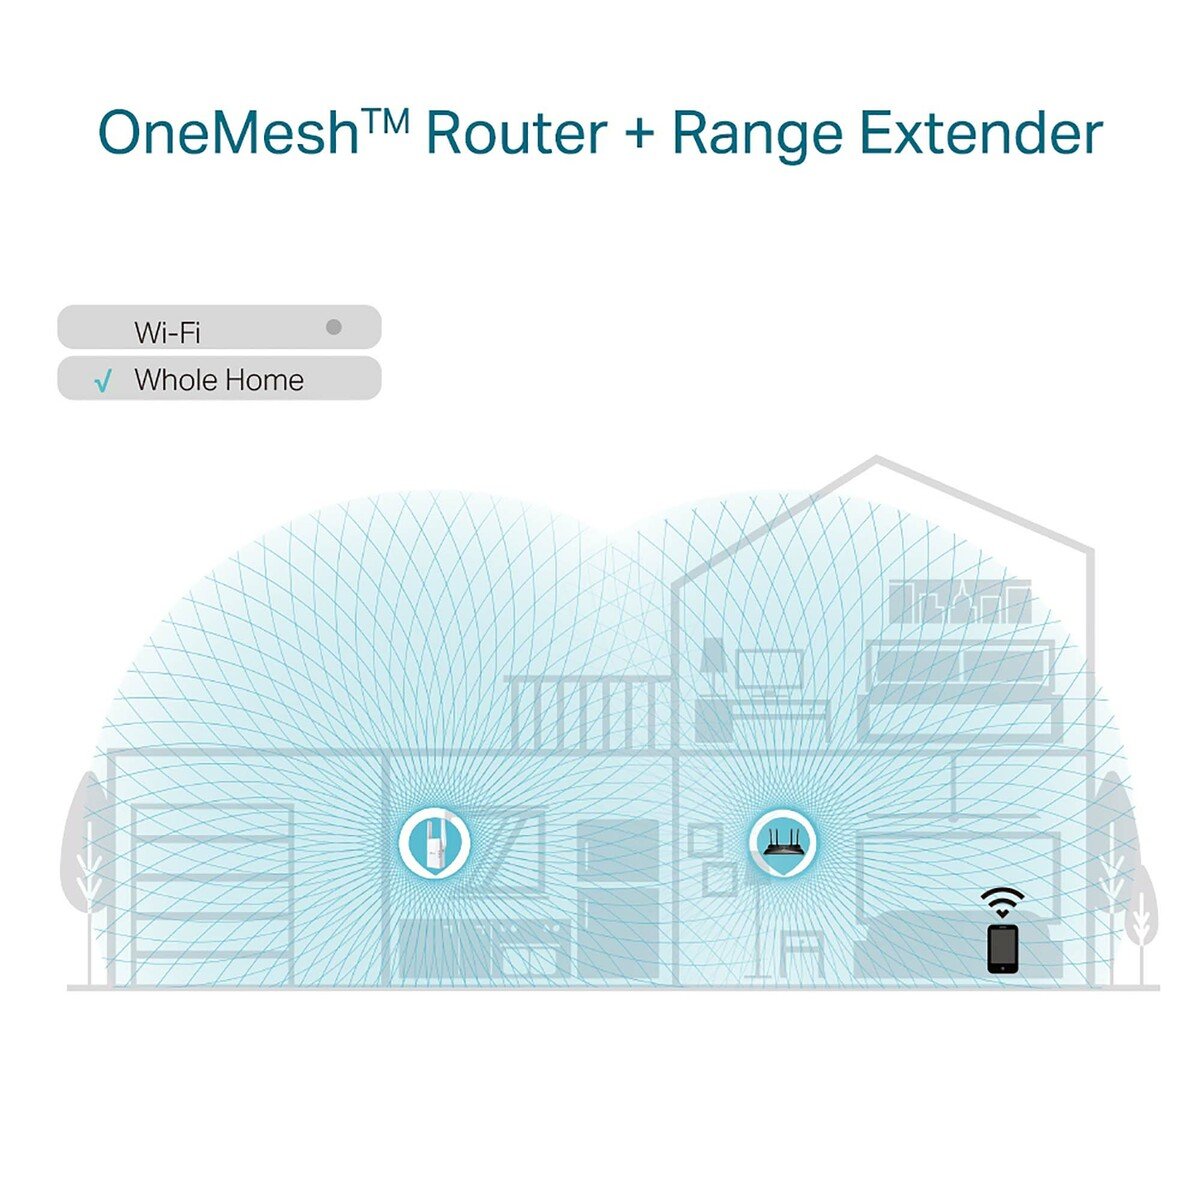 TP-Link RE605X Wireless Dual Band WiFi Range Extender